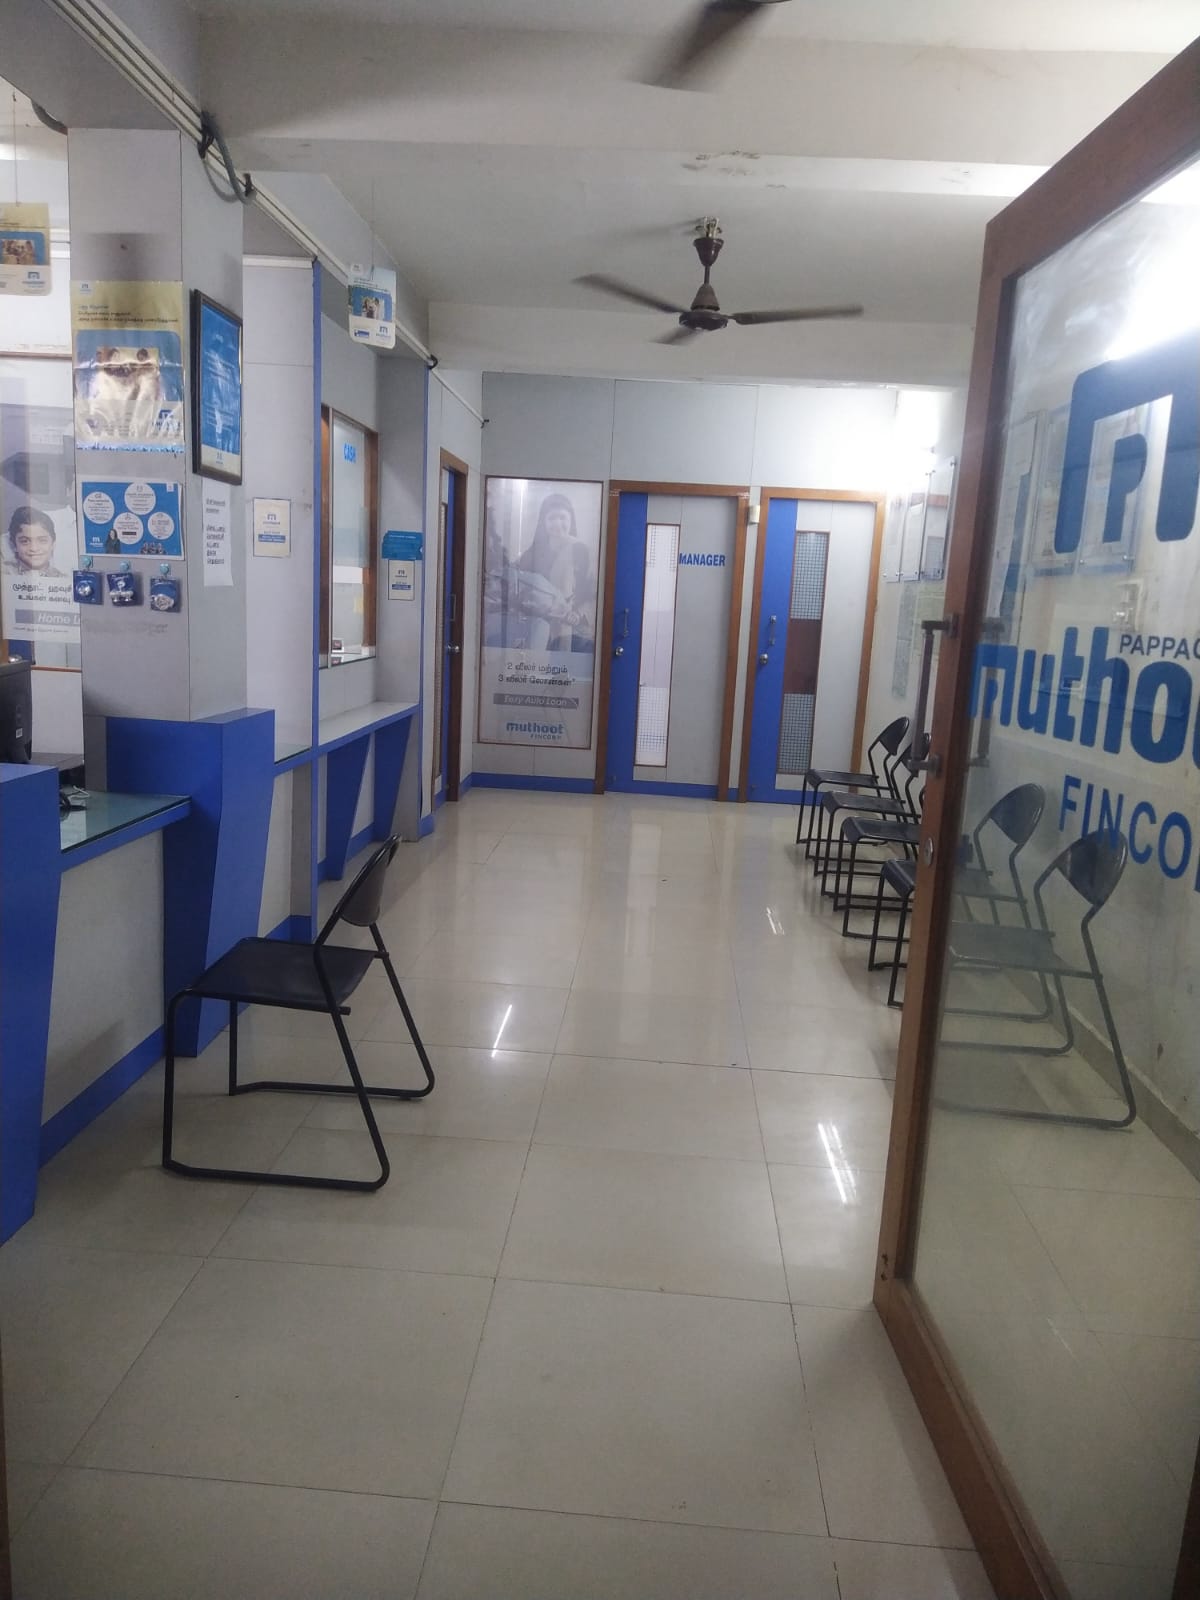 Muthoot Fincorp Gold Loan Services in Salt Road, Kanchipuram, Tamil Nadu